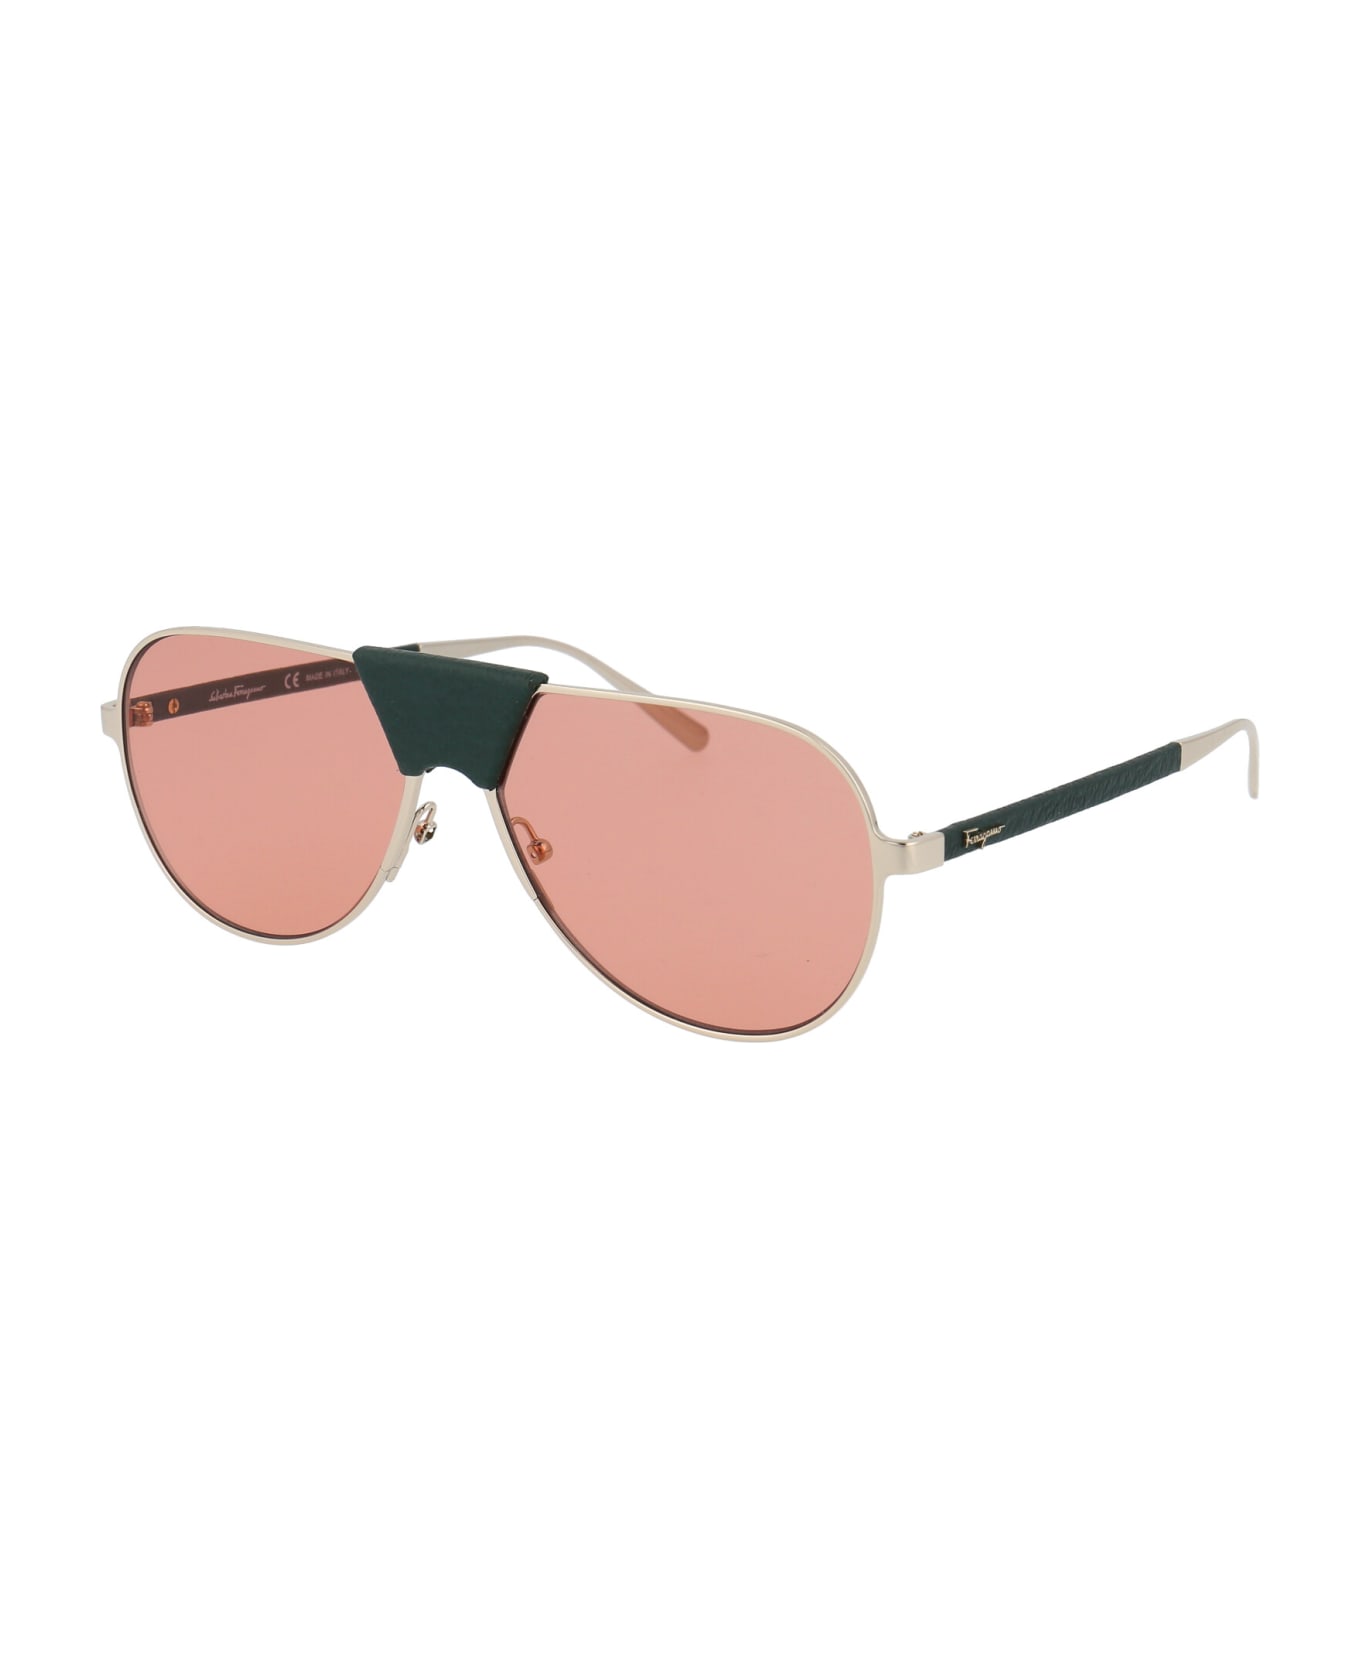 Salvatore Ferragamo Eyewear Sf220sl Sunglasses - 754 LIGHT GOLD/FOREST